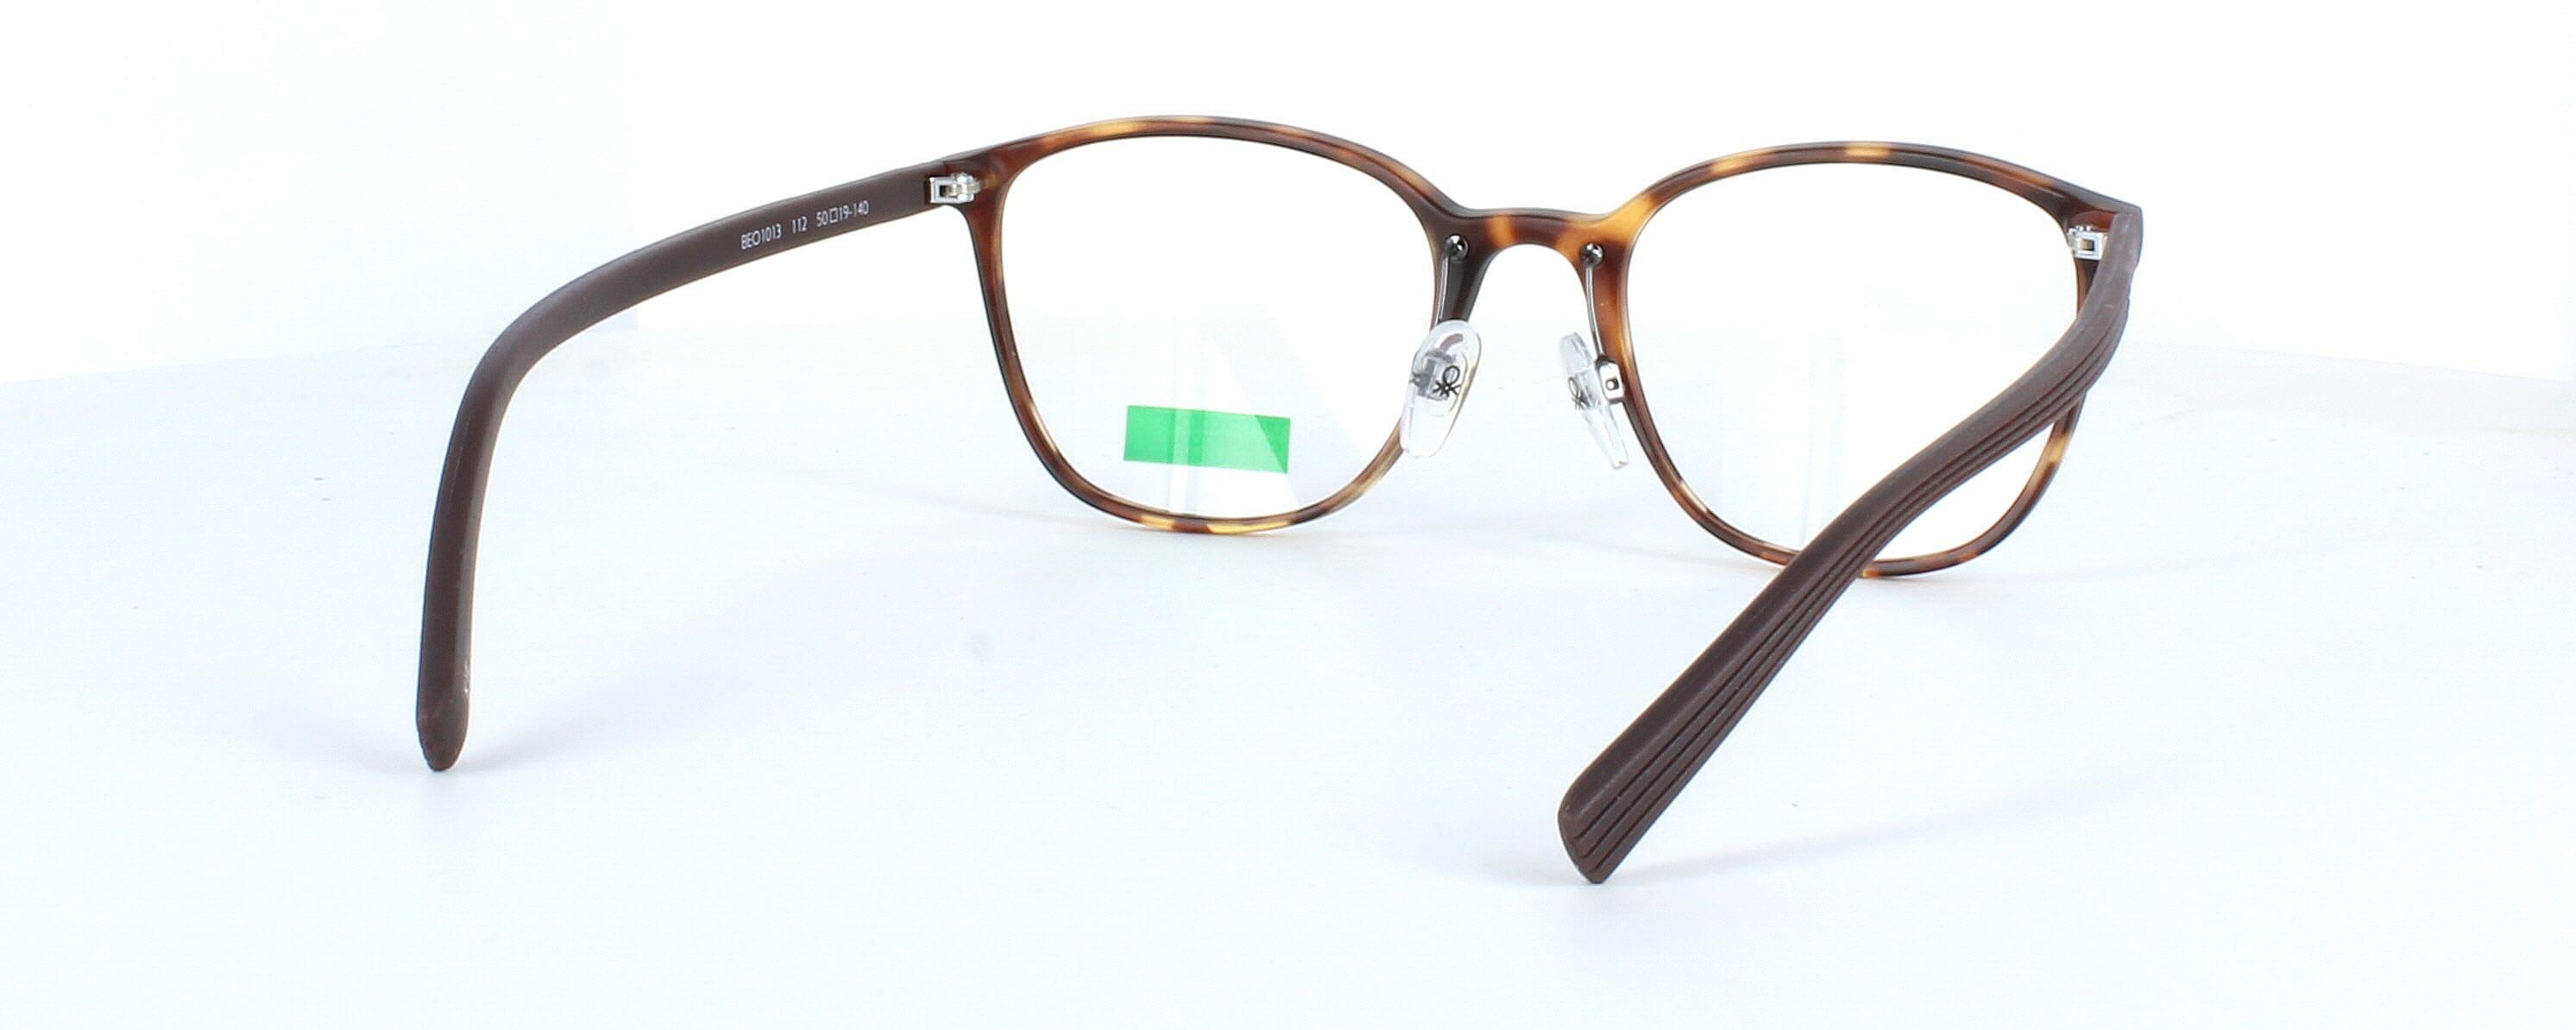 Benetton BEO1012 921 - Ladies matt tortoise round shaped TR90 lightweight glasses - image view 5